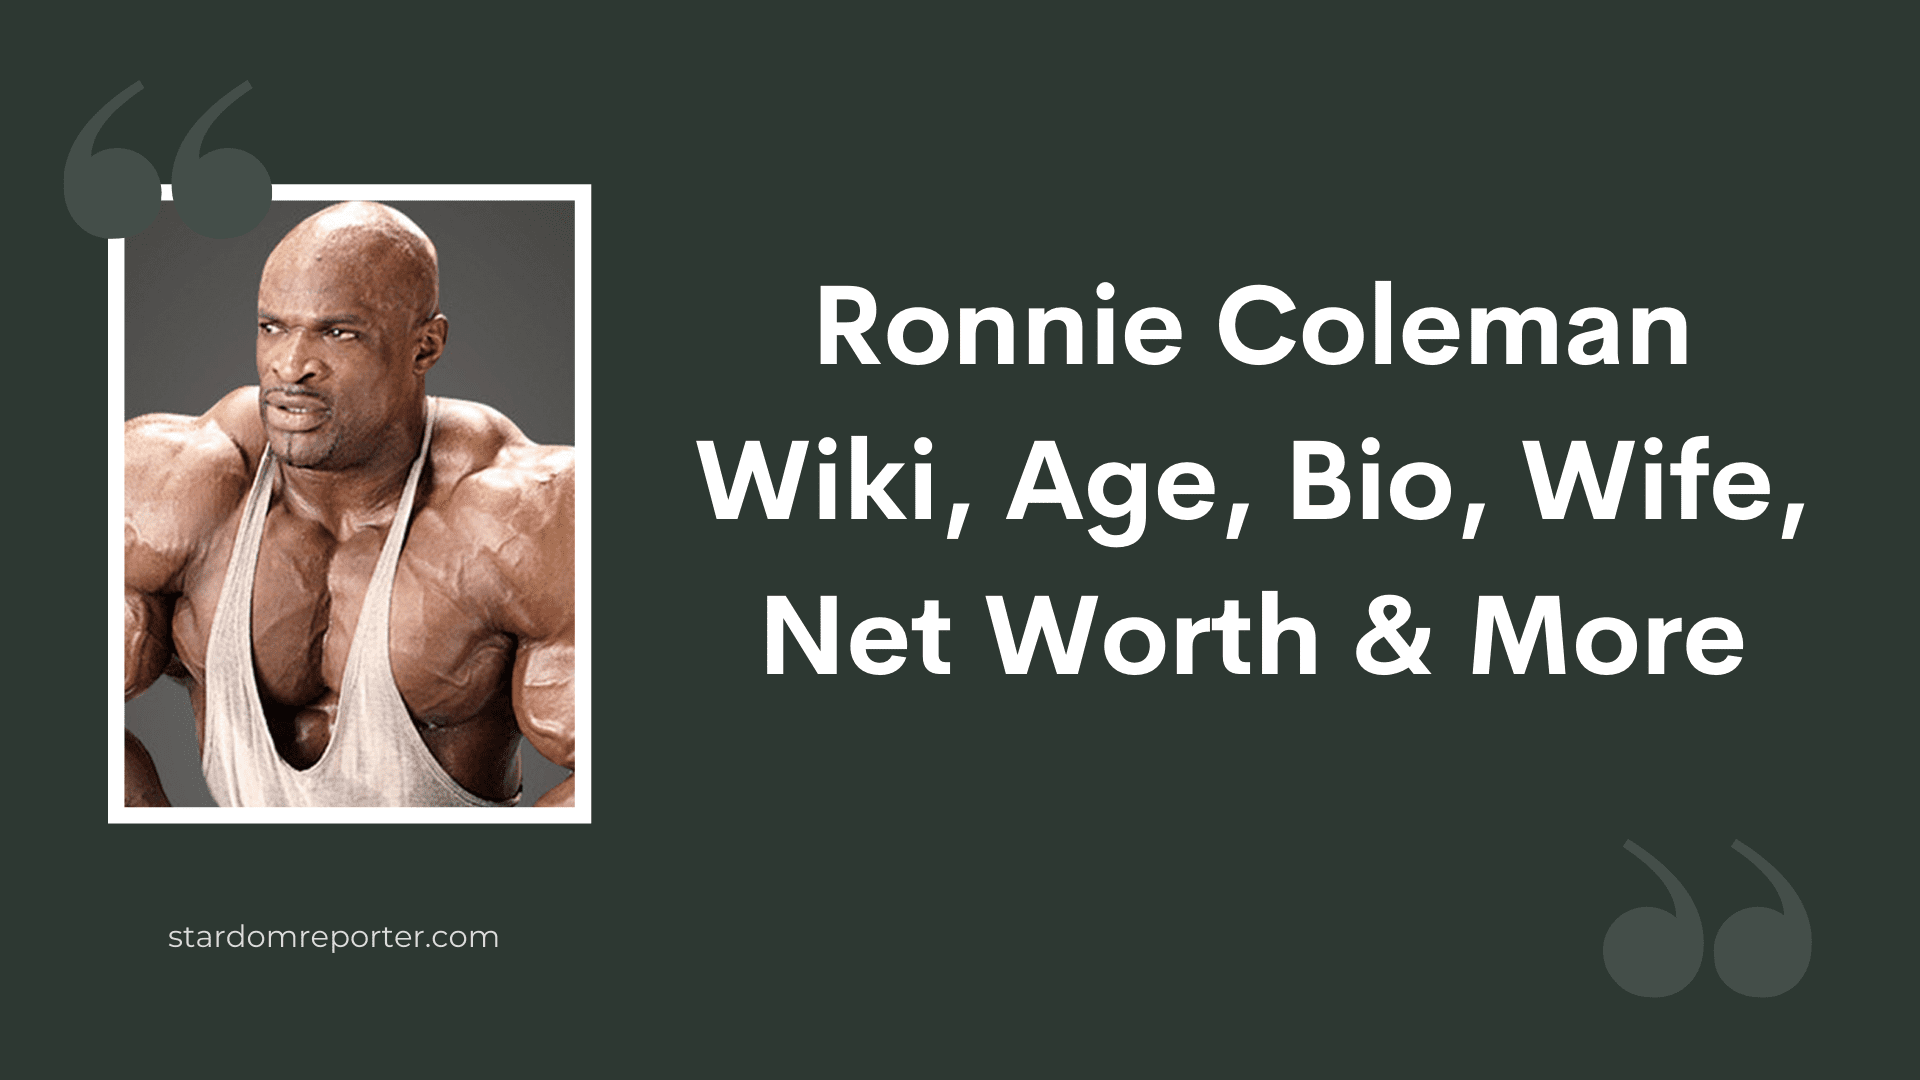 Ronnie Coleman Wiki, Age, Bio, Wife, Net Worth & More - 11